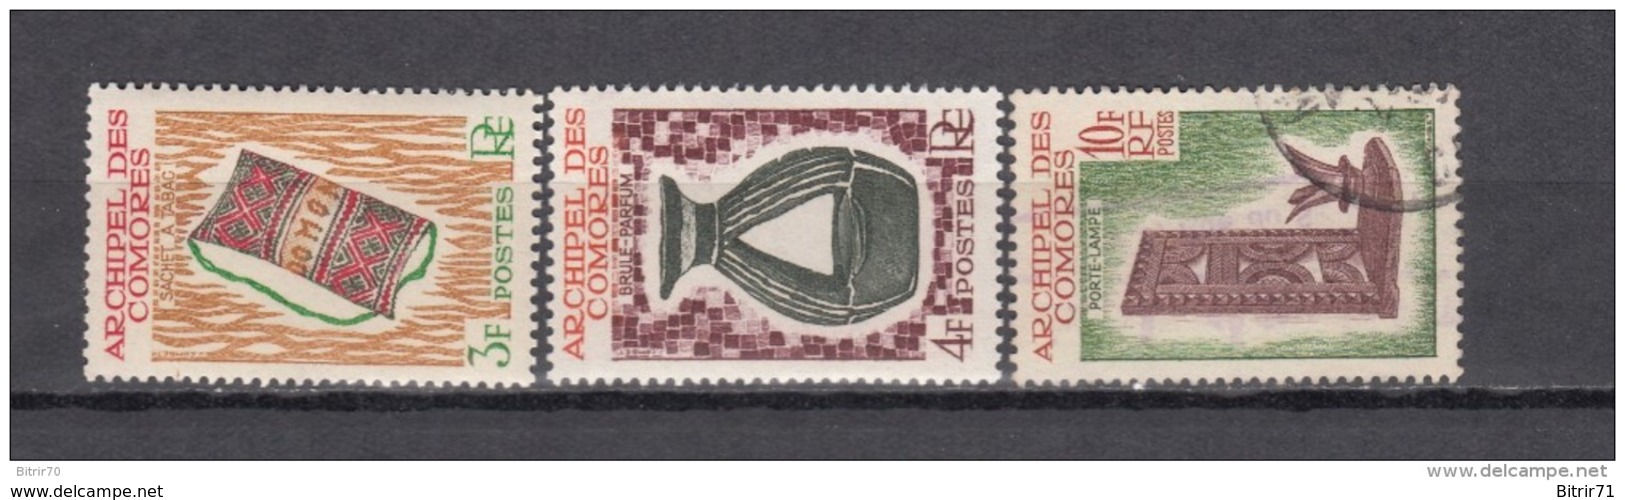 1963    YVERT  Nº  29 / 31 , - Used Stamps